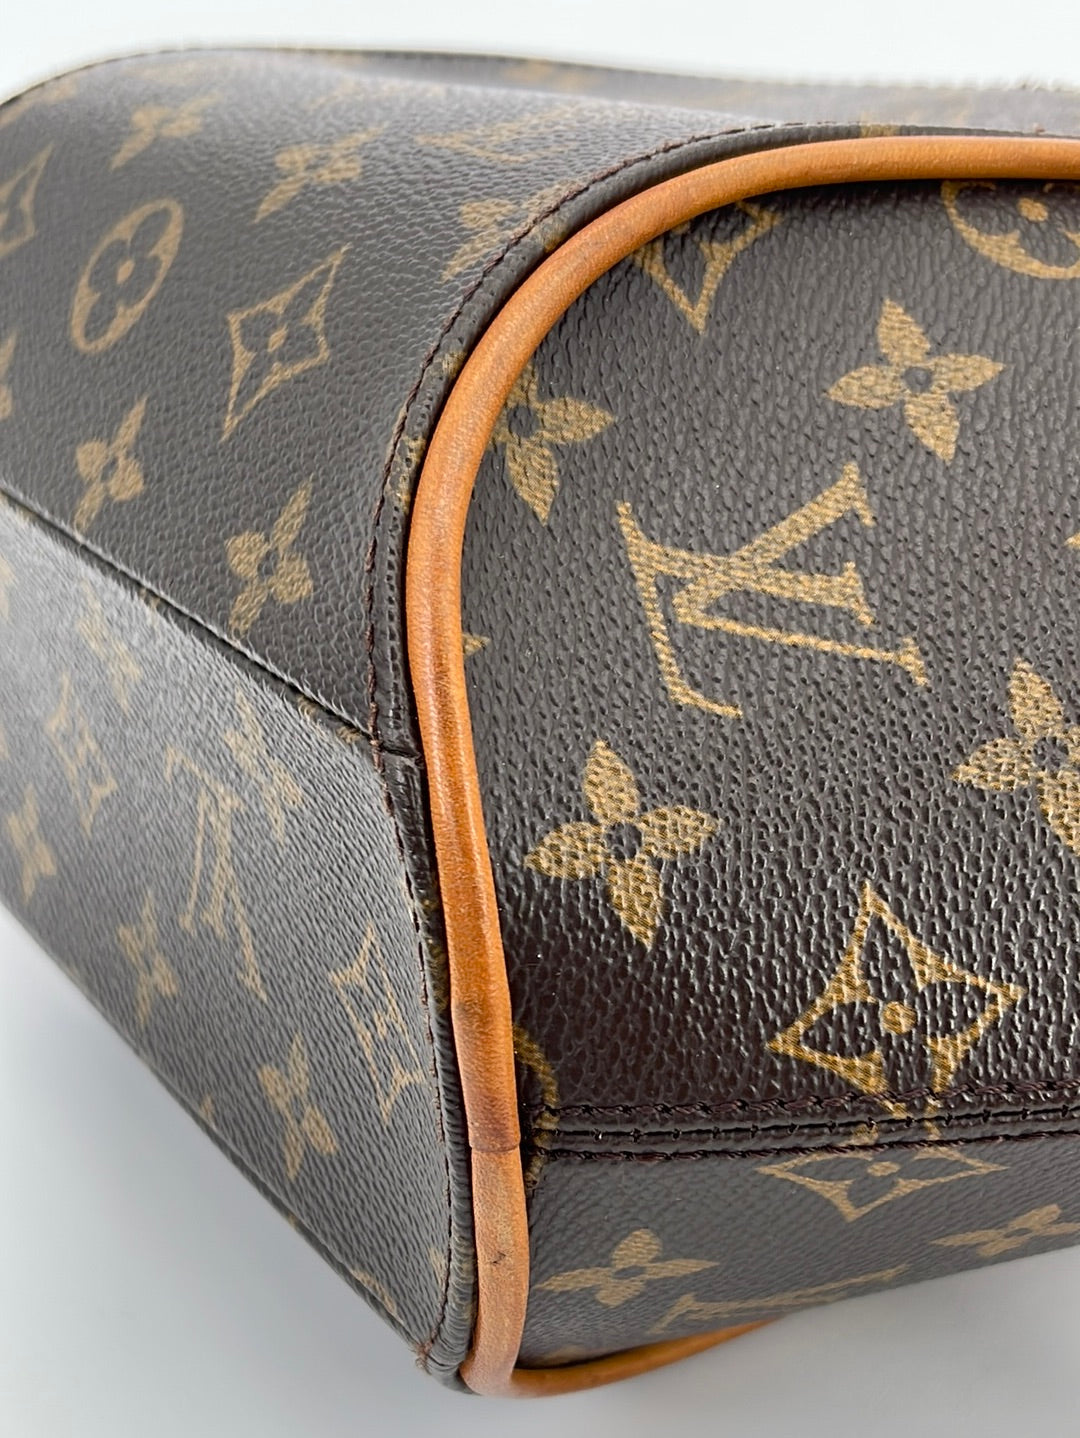 Louis Vuitton - Ellipse PM Handbag - Monogram Canvas GHW - Pre-Loved